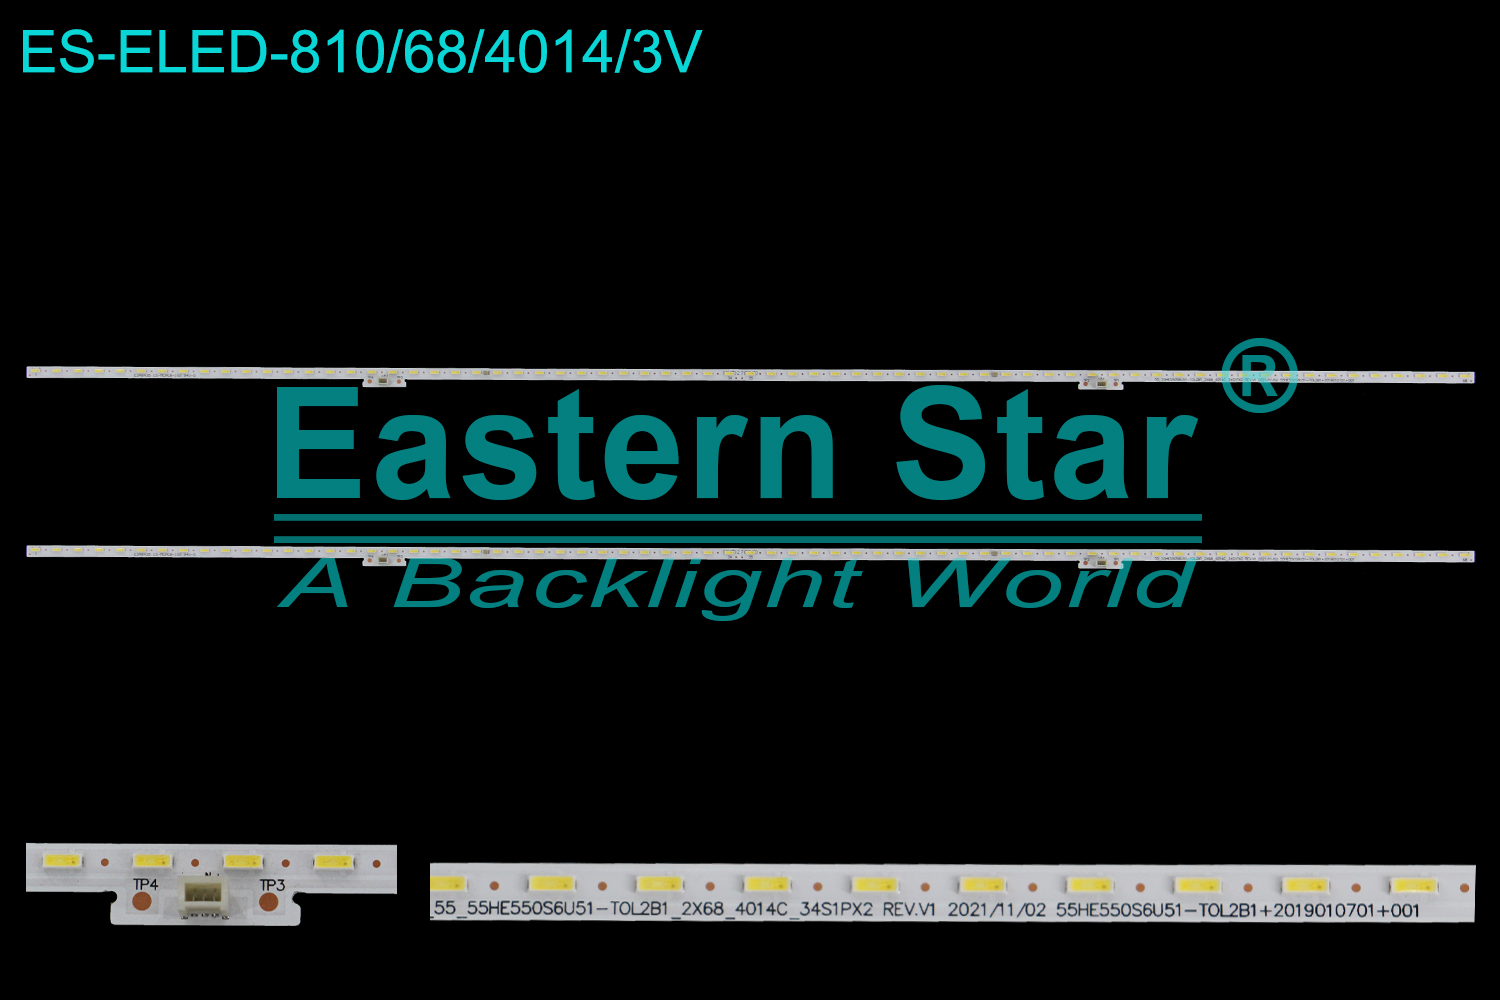 ES-ELED-810 ELED/EDGE TV backlight use for 55'' Hisense  HZ55E5A  55_55HE550S6U51-TOL2B1_2X68_4014C_34S1PX2 REV.V1 2021/11/02 55HE550S6U51-TOL2B1+2019010701+001 LED STRIPS(2)